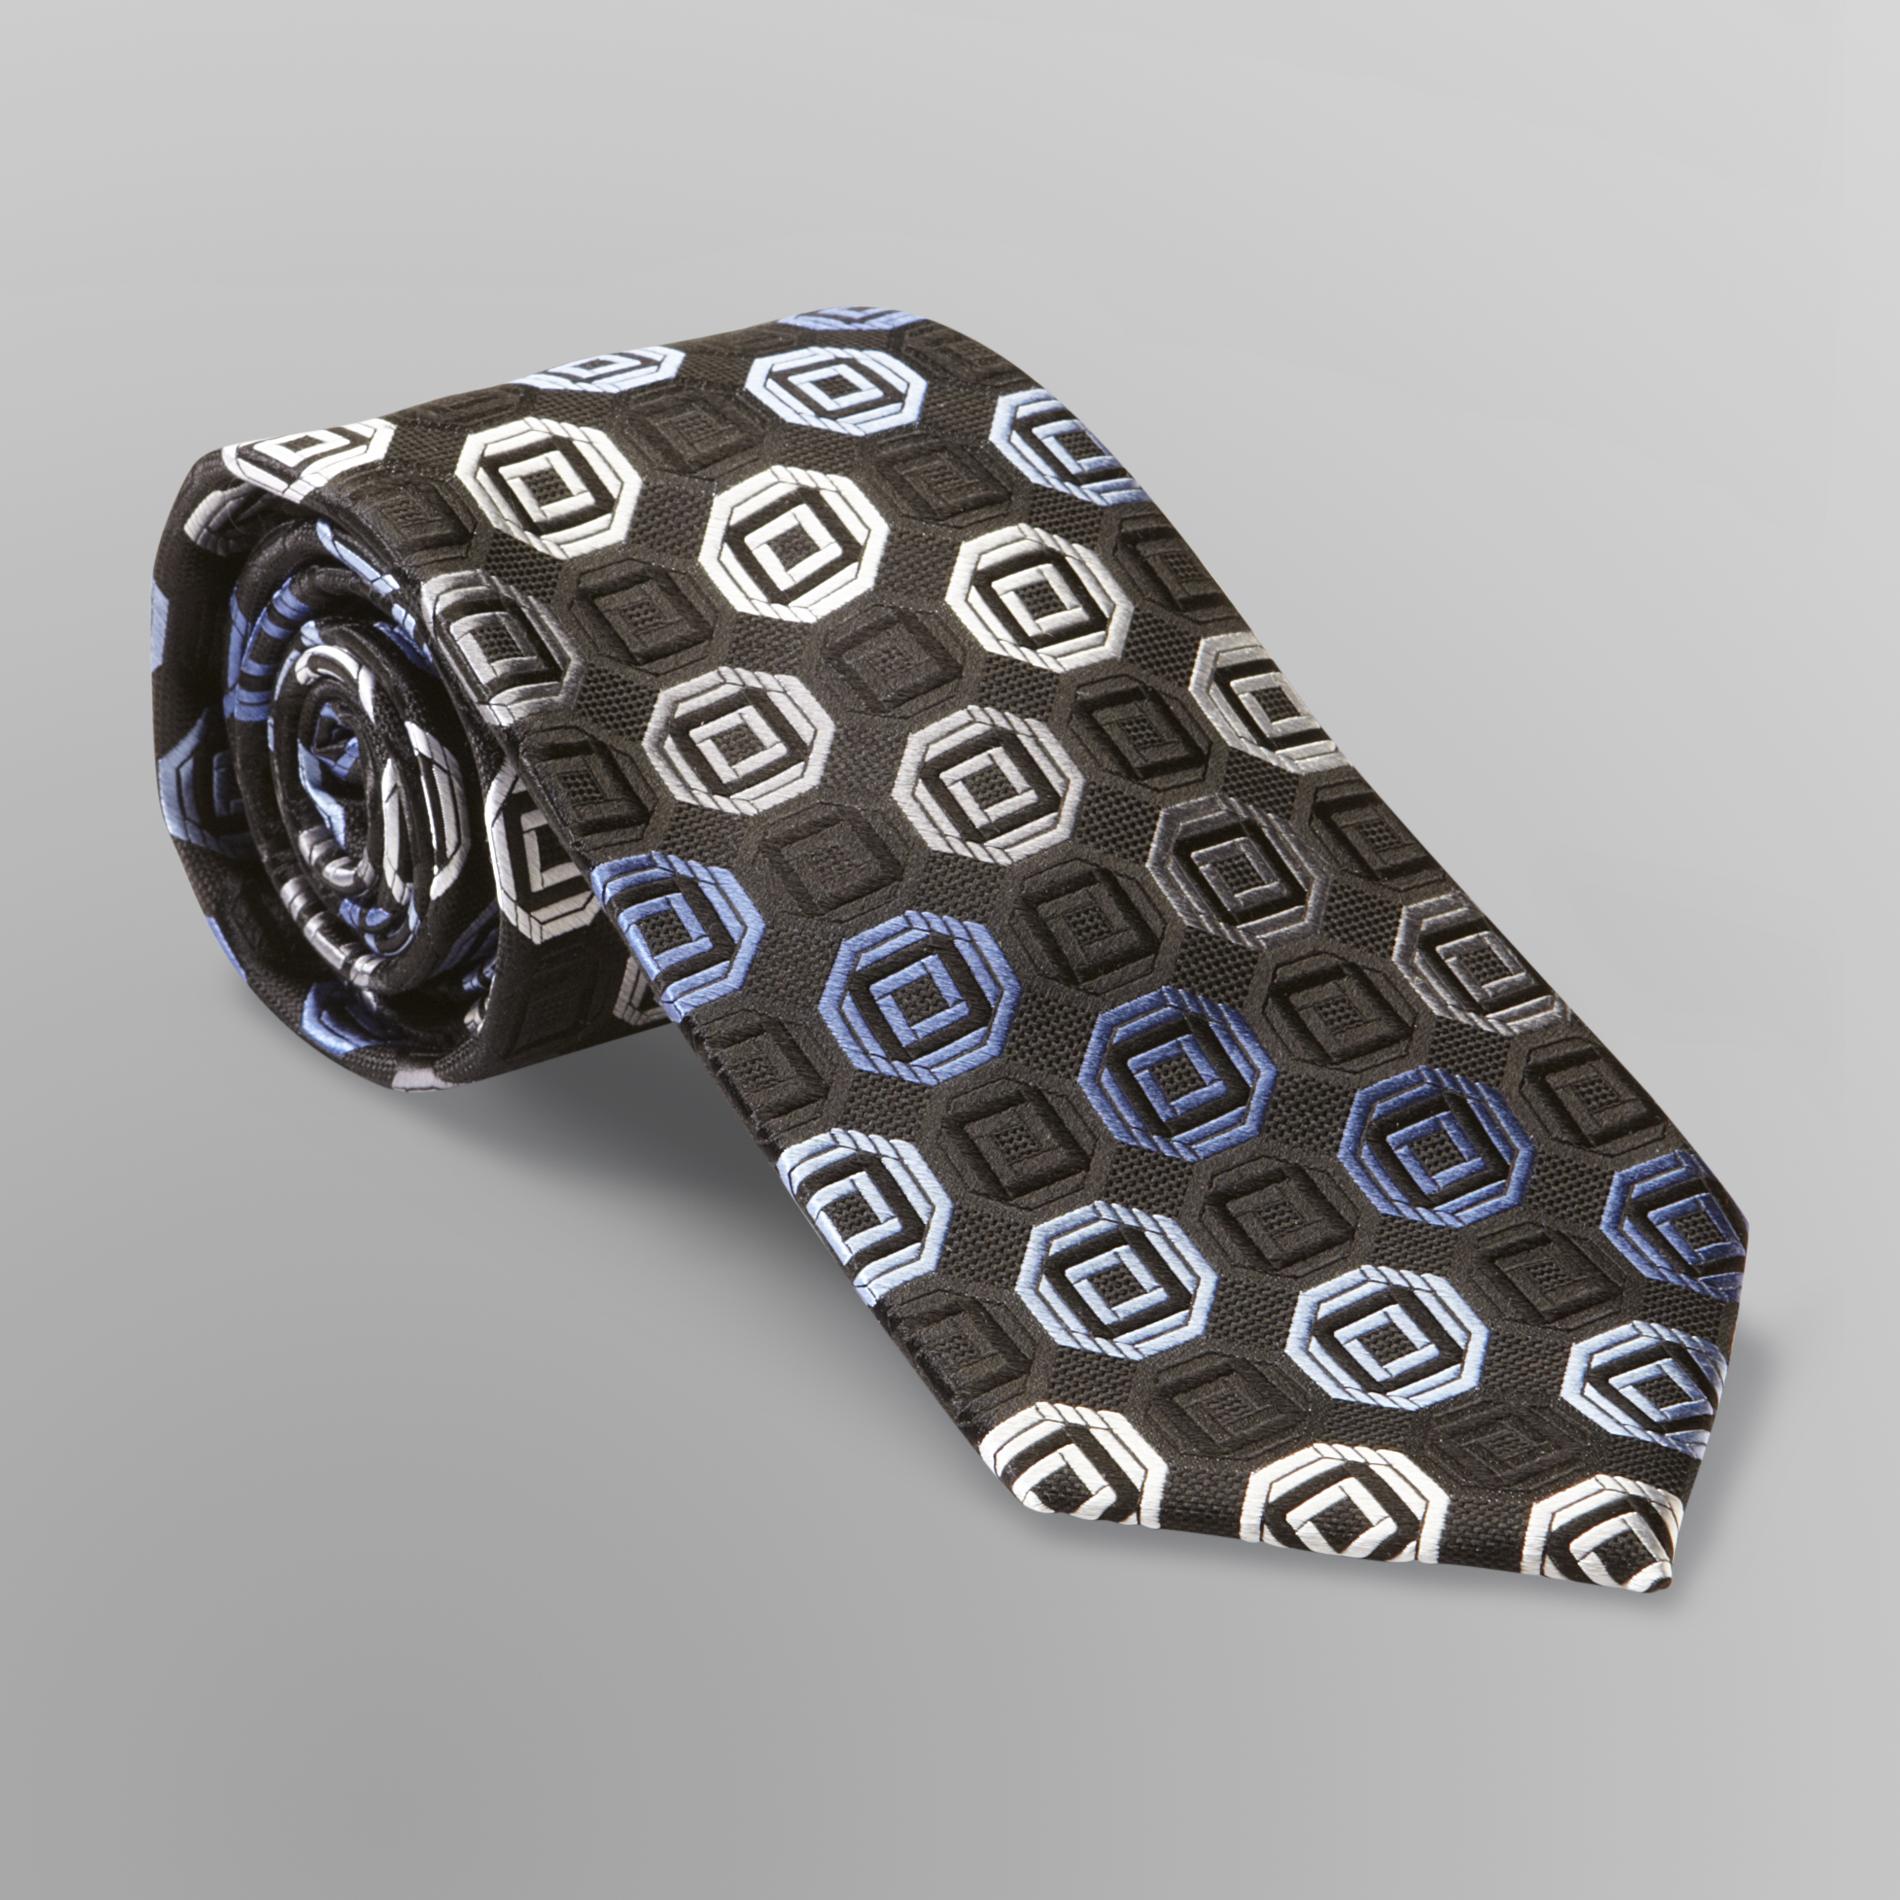 Covington Men's Silk Necktie - Puzzle Grid